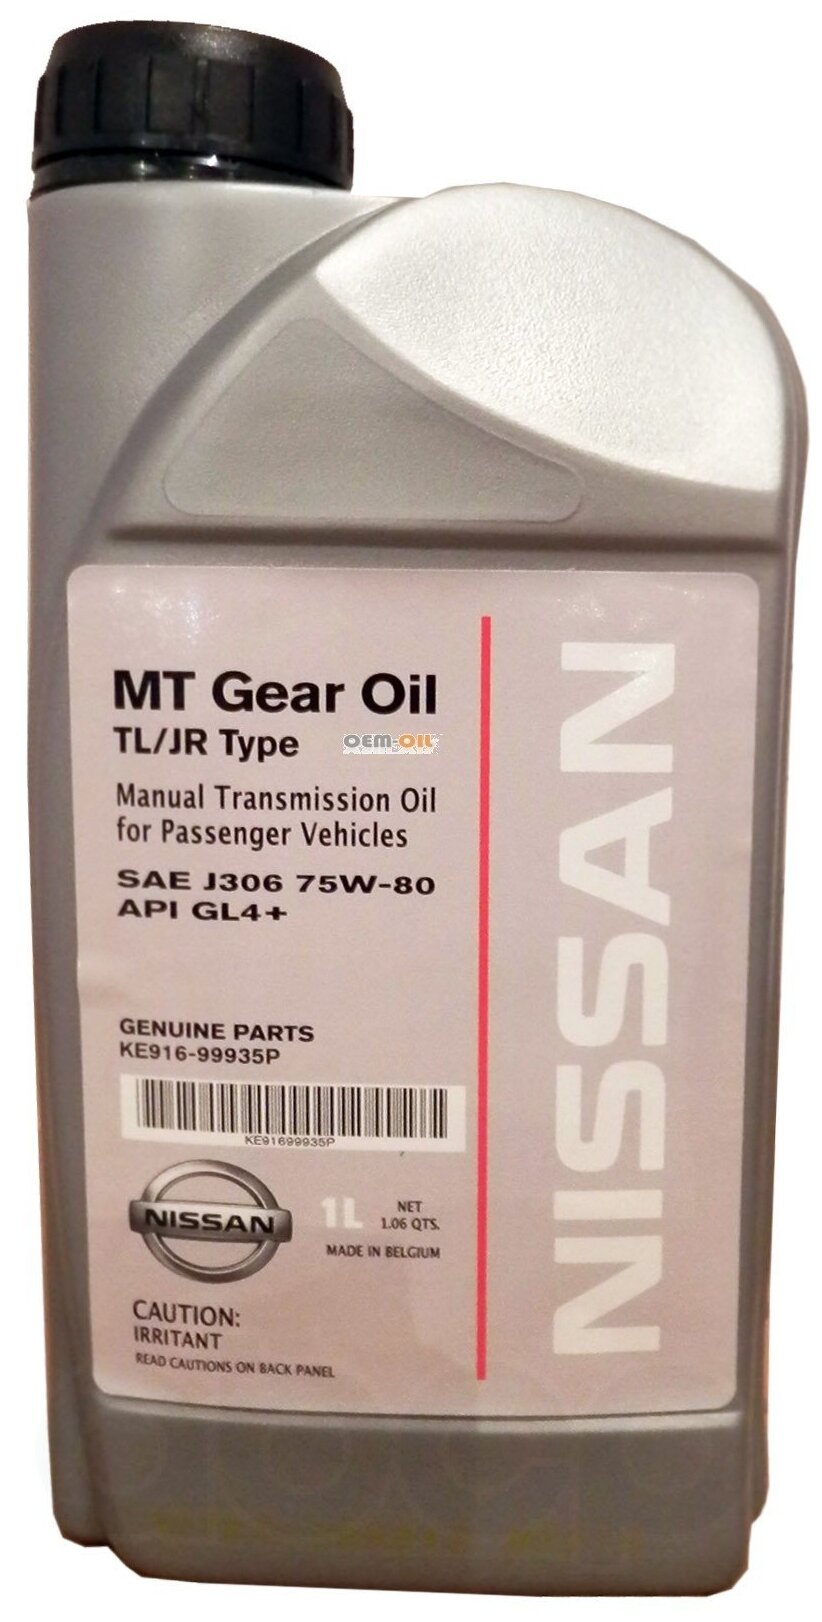 nissan ke916-99935r Масло трансмиссионное nissan mt gear oil type tl/jr 75w80 синтетическое 1 л ke916-99935r